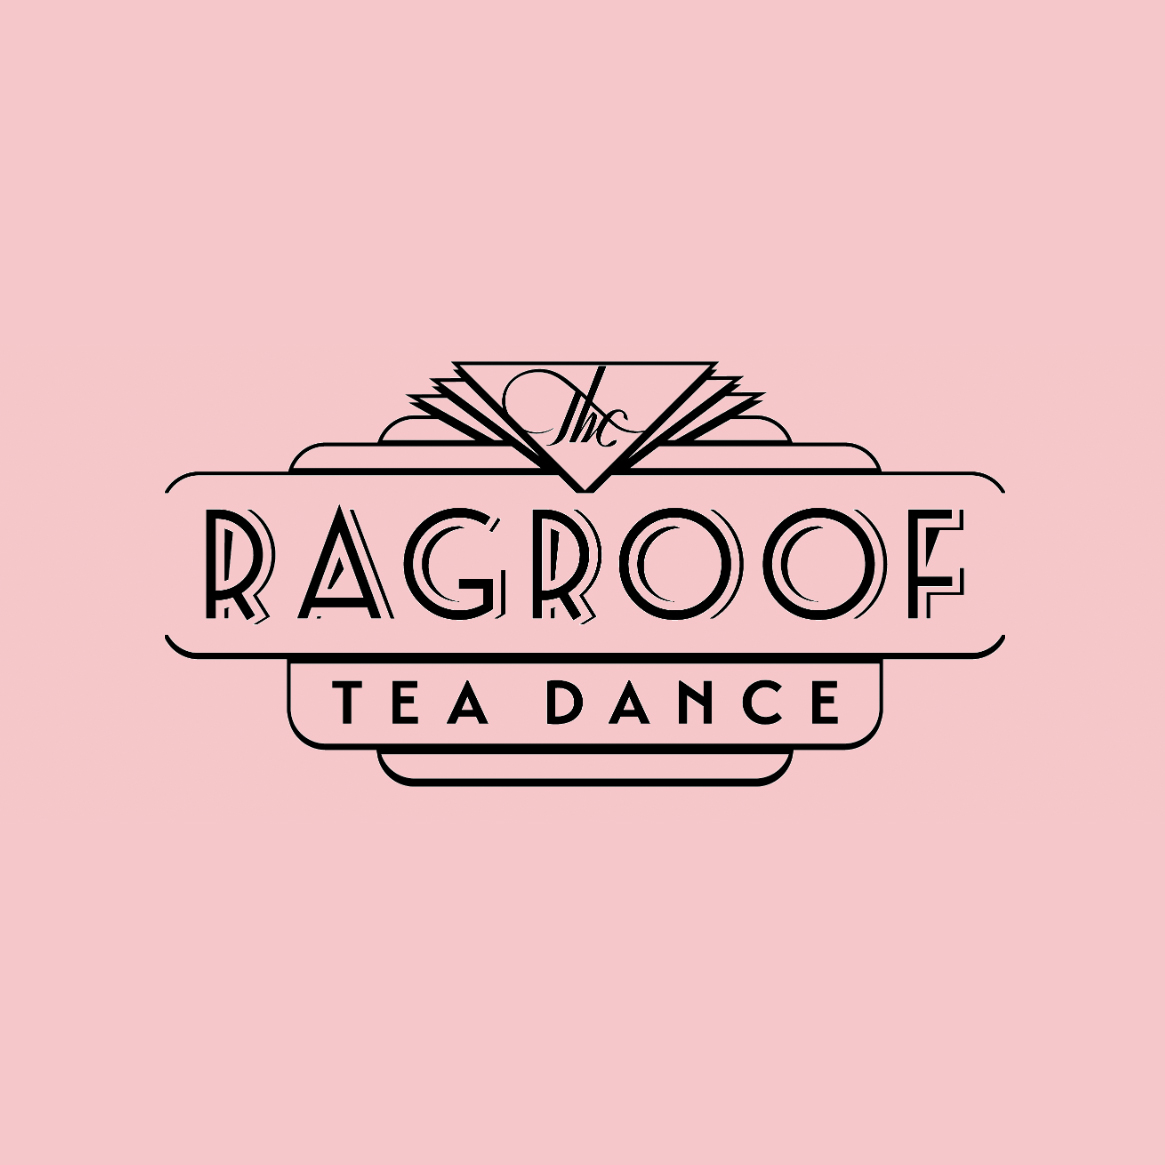 The Ragroof Tea Dances